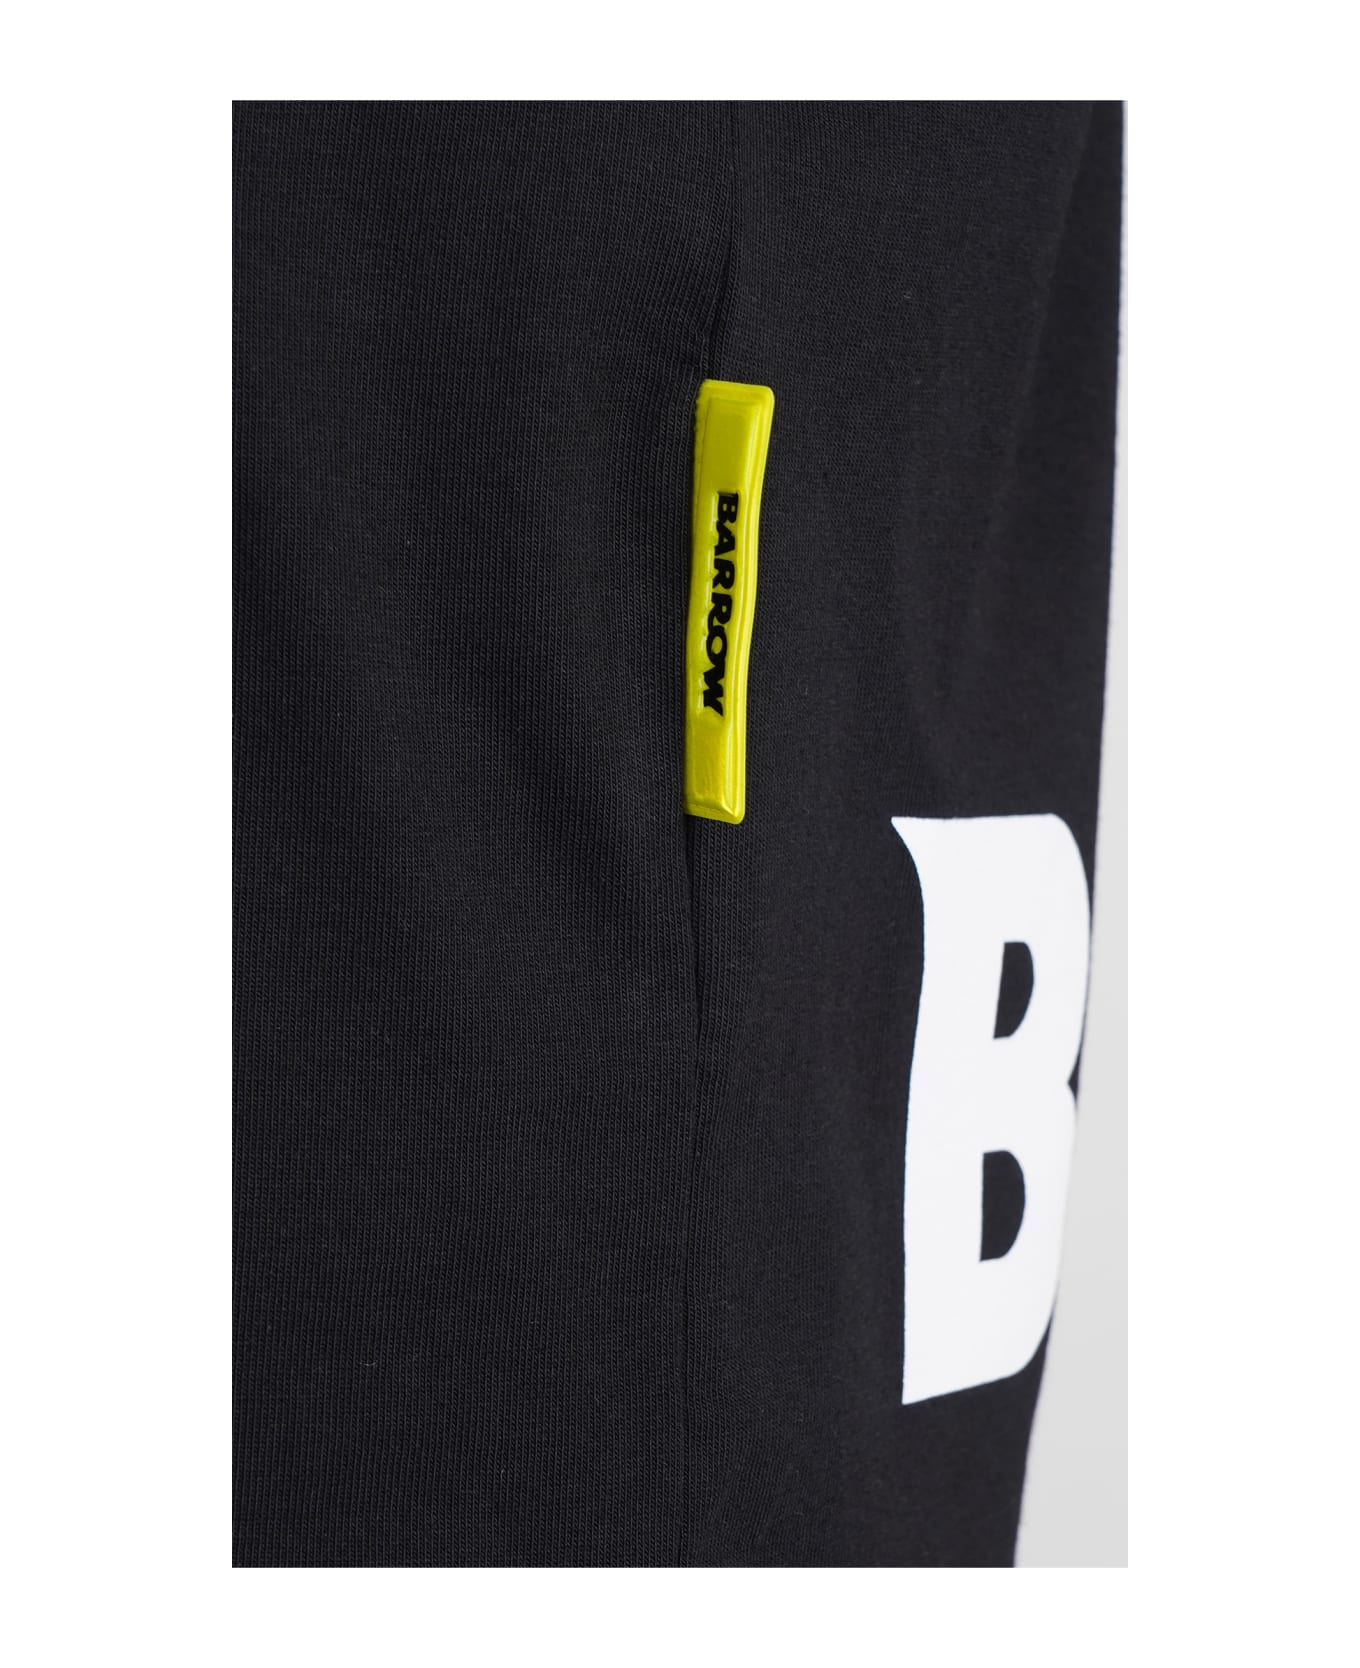 Barrow Black T-shirt With Lettering Logo - Black シャツ